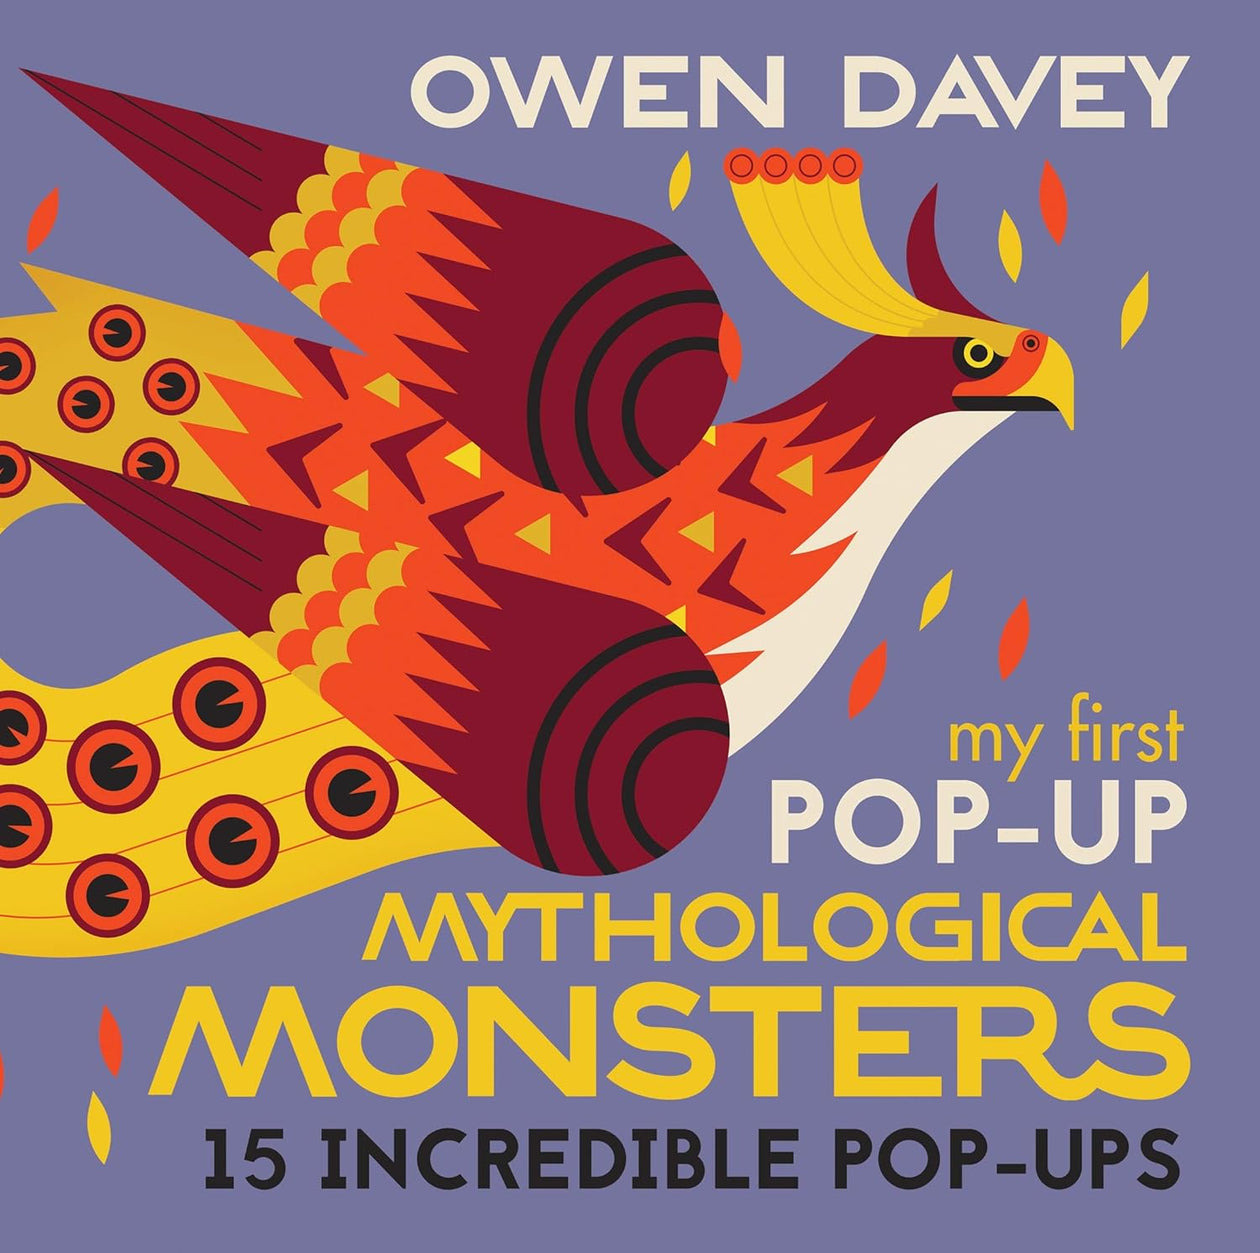 Owen Davey: My First Pop-Up - Mythological Monsters